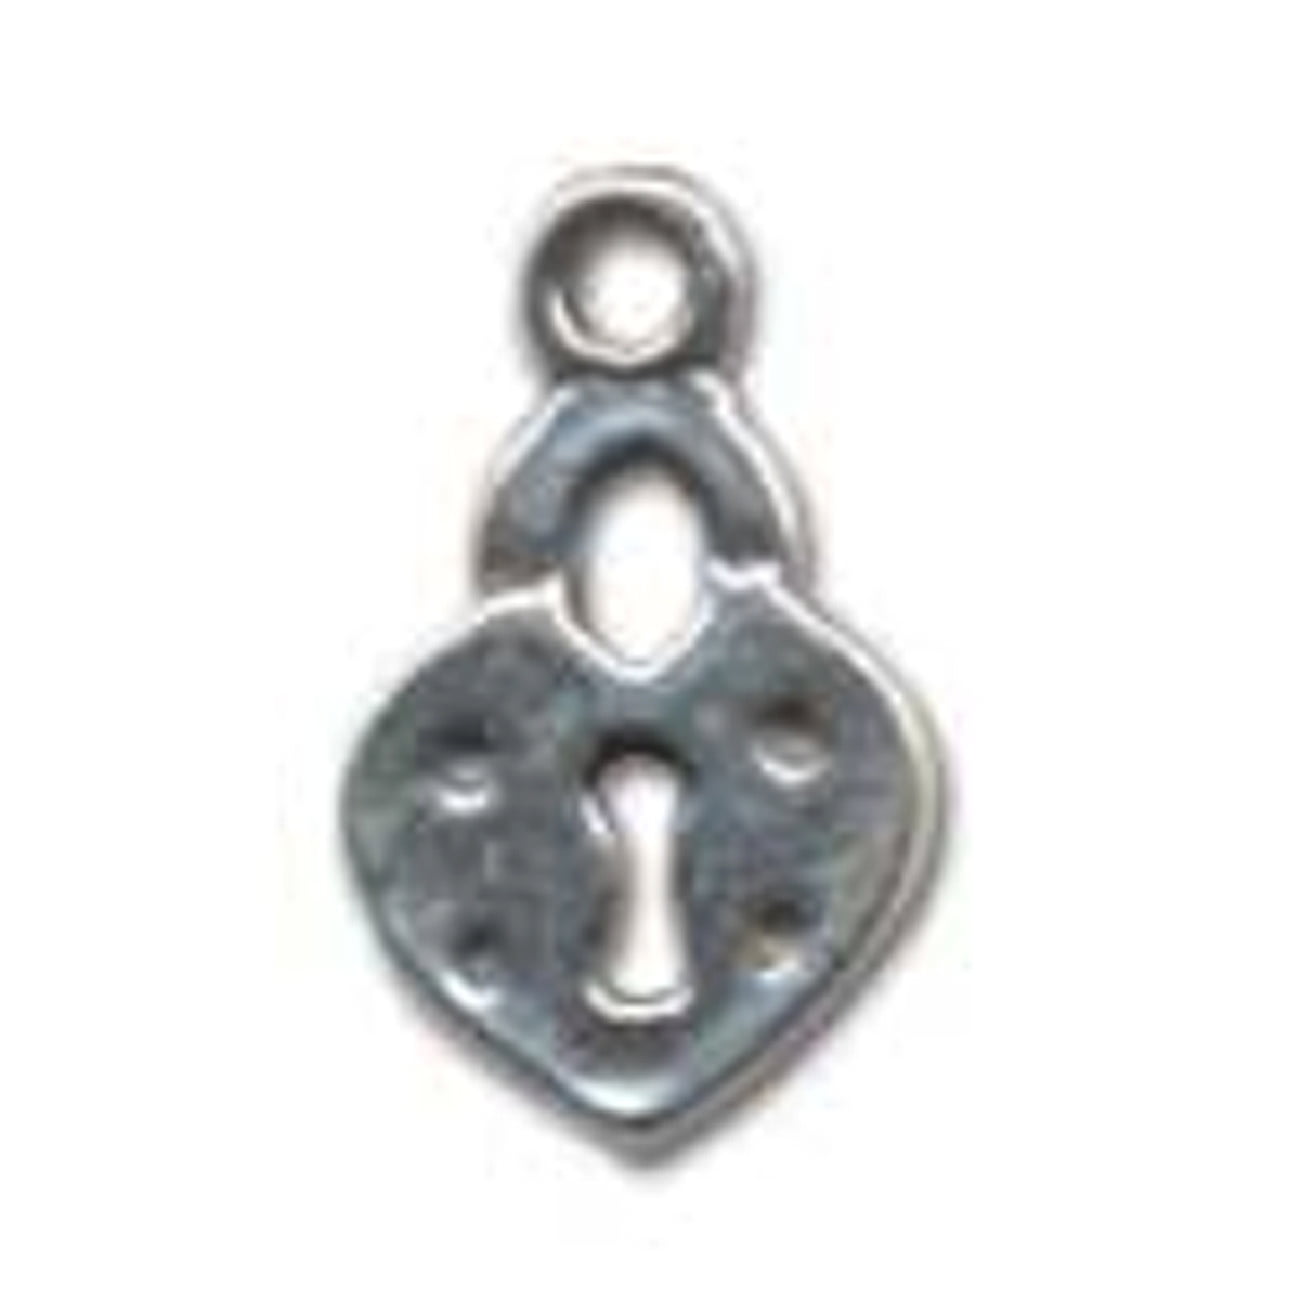 Sterling Silver Lock Necklace Silver Padlock Necklace Lock -  Israel